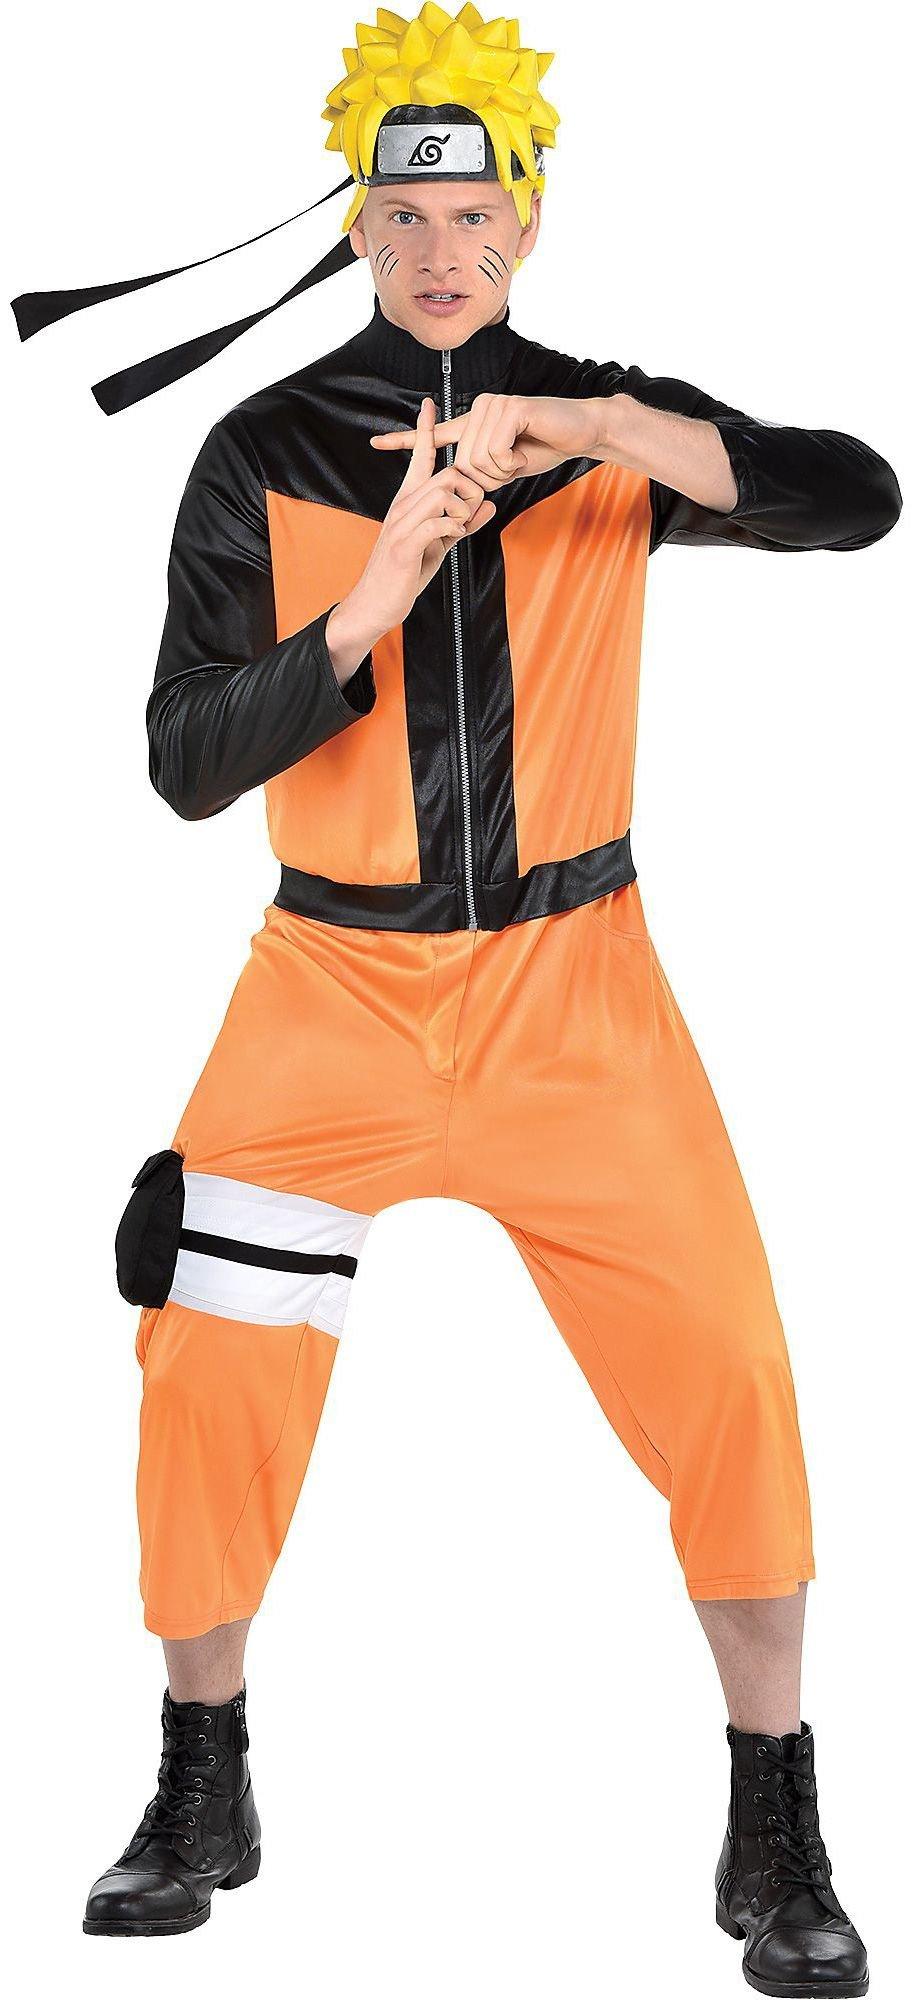 Costume Naruto : Déguisement Ninja Naruto Uzumaki